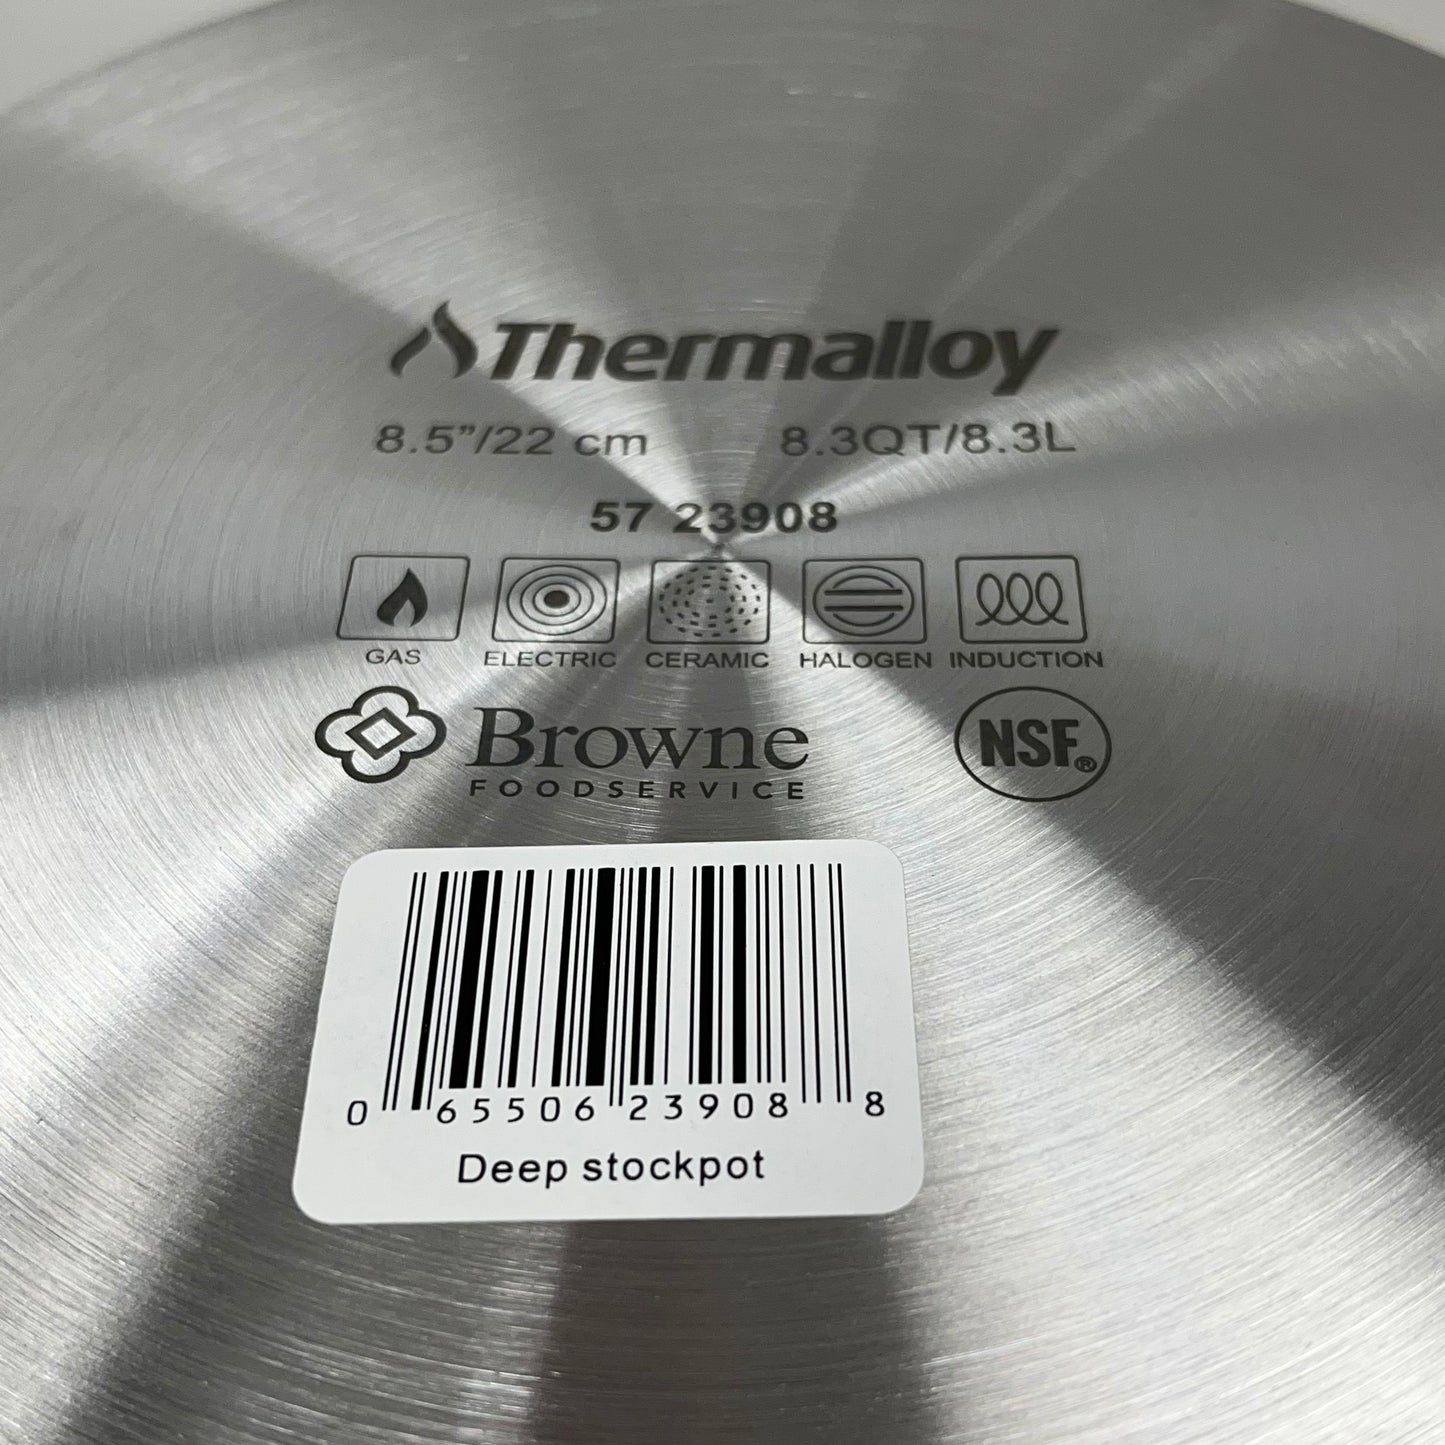 BROWNE Thermalloy Deep Stock Pot 8.3 Qt 8.5" x 8.5" 5723908 (New)